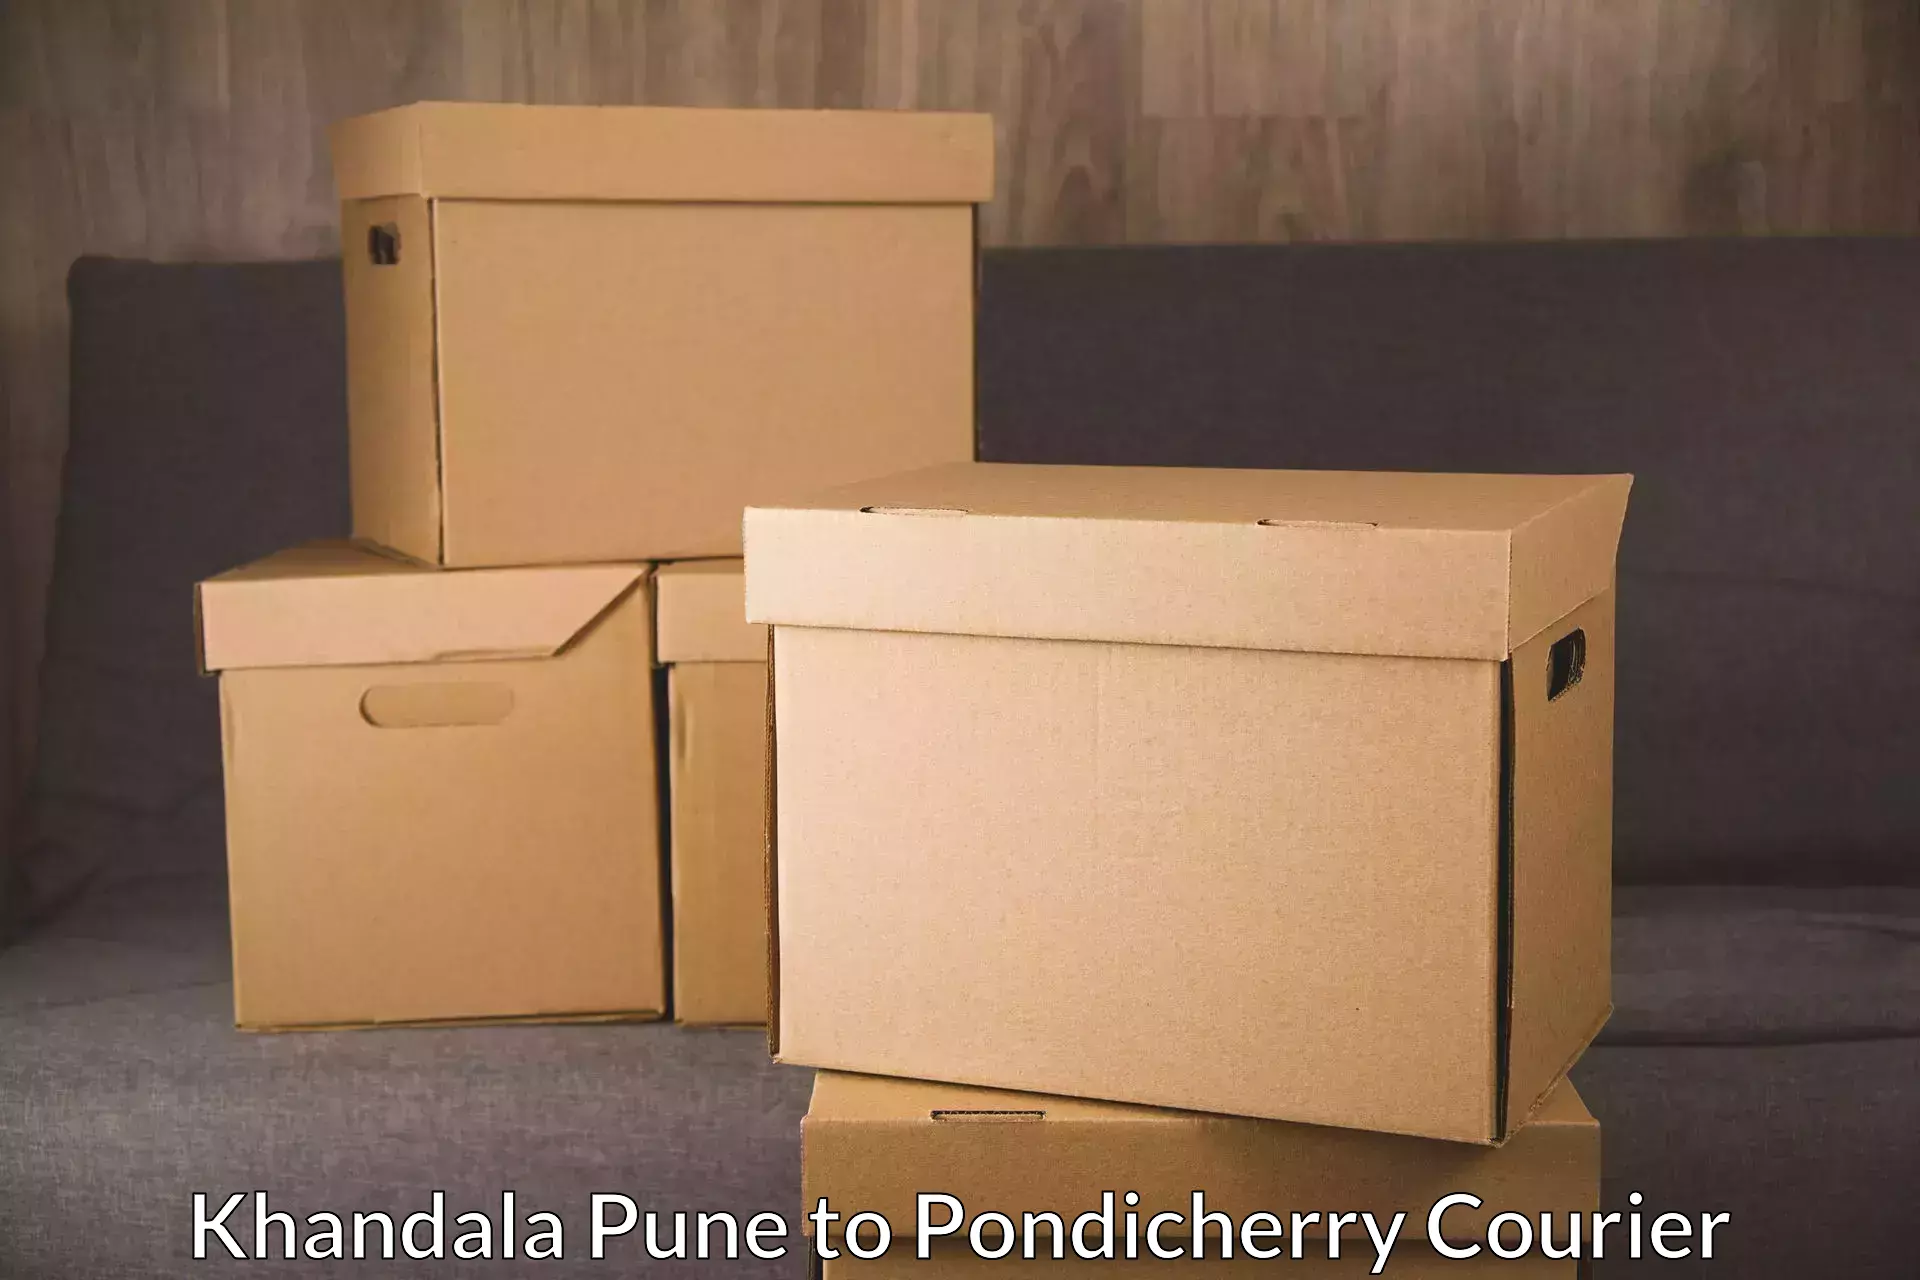 Global shipping solutions Khandala Pune to Pondicherry